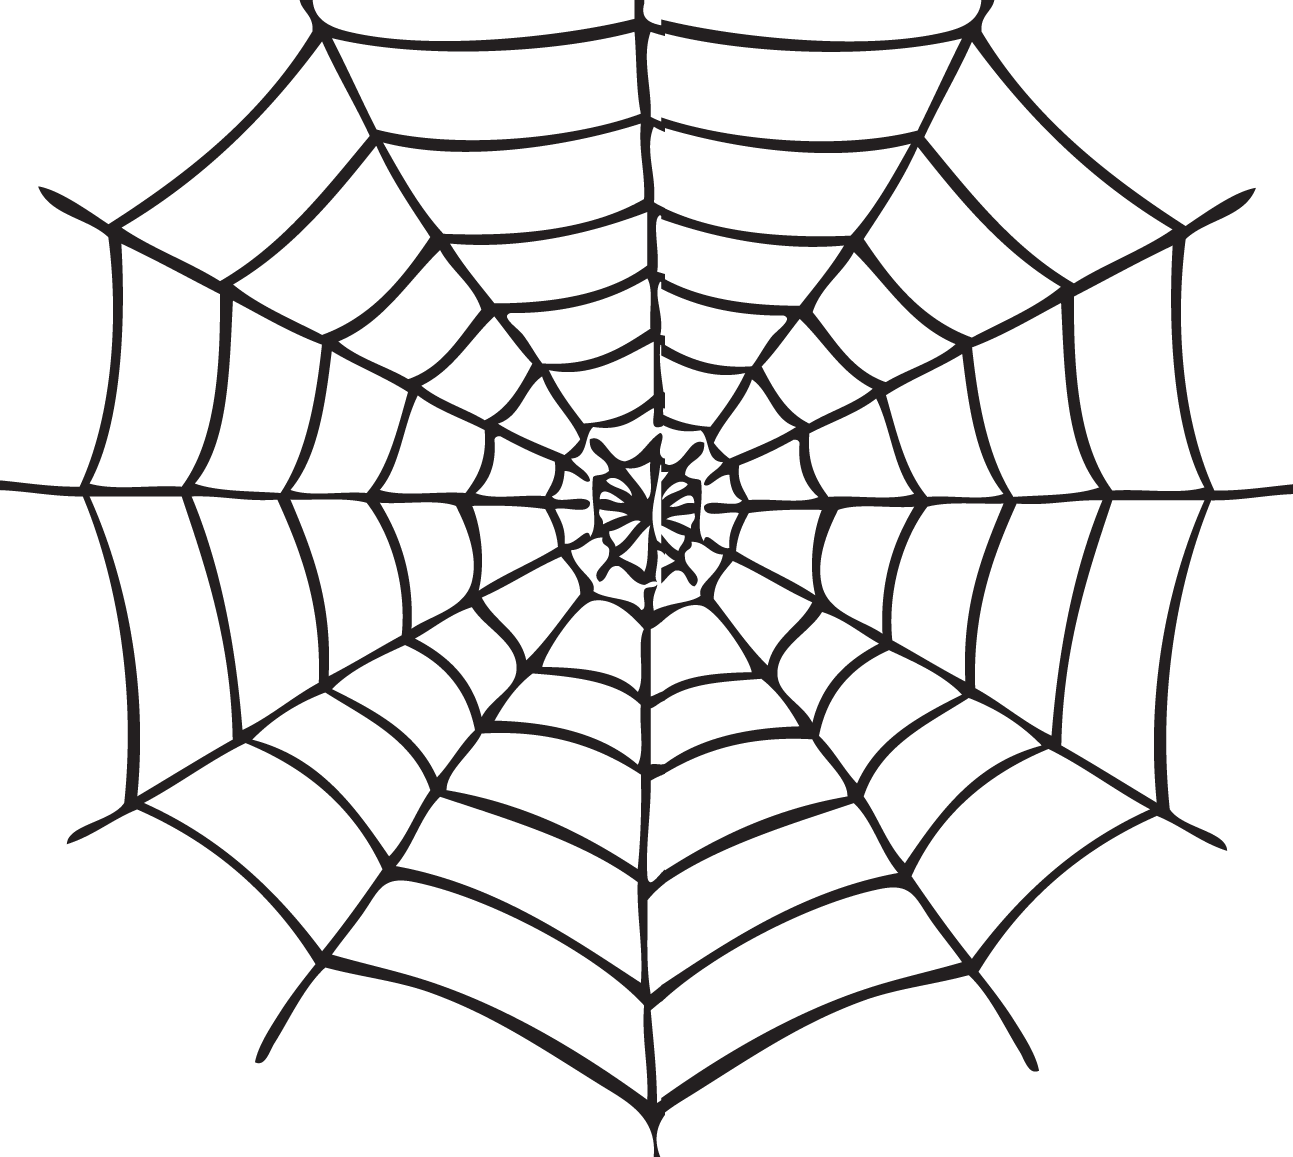 Halloween Spiders Clipart - Clip Art Spider Web.